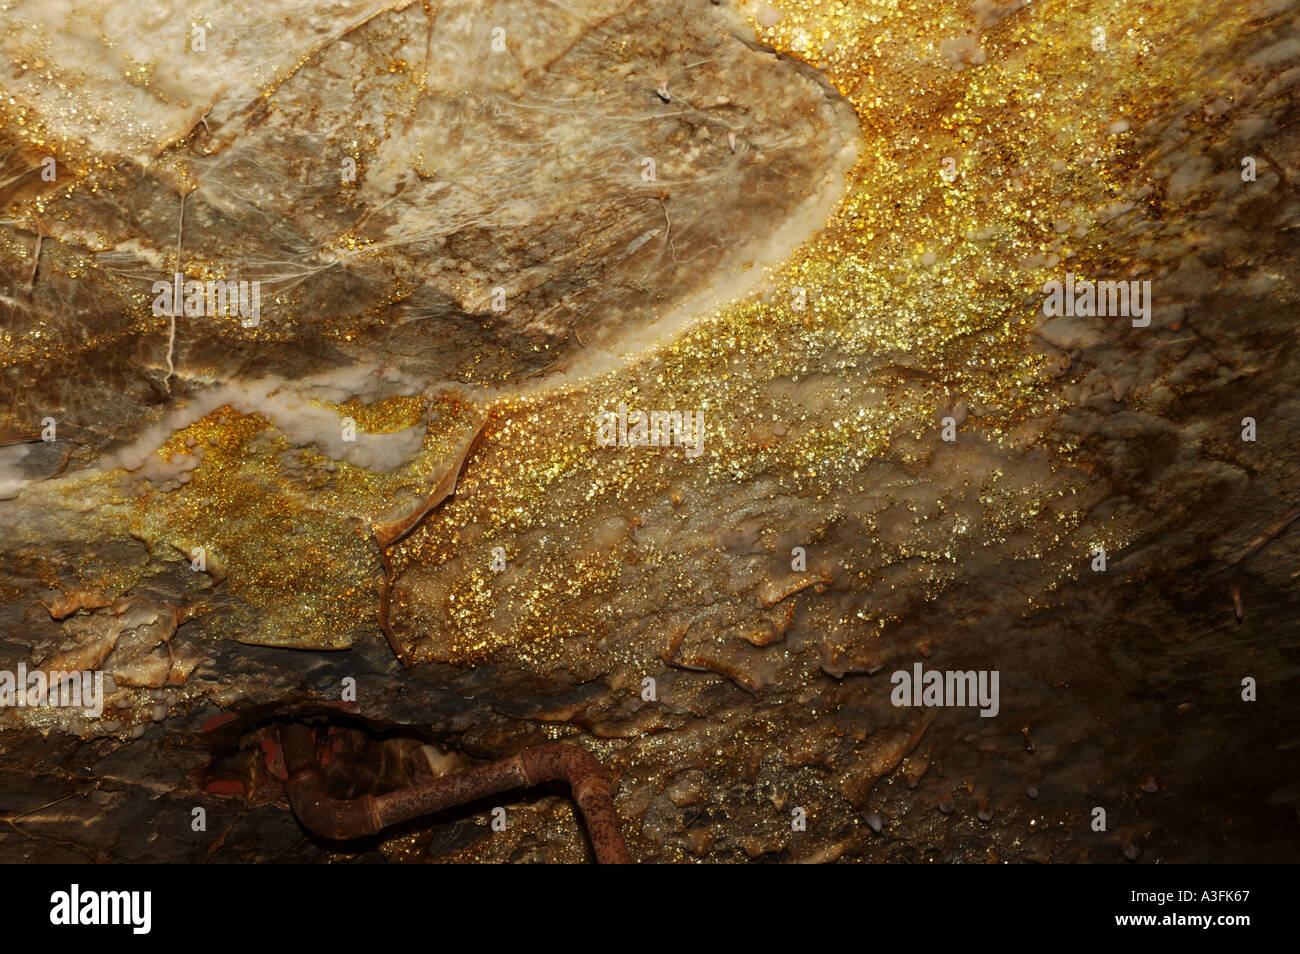 Dry rot fungus fruiting body serpula lacrymans spread onto brickwork from nearby timber Stock Photo